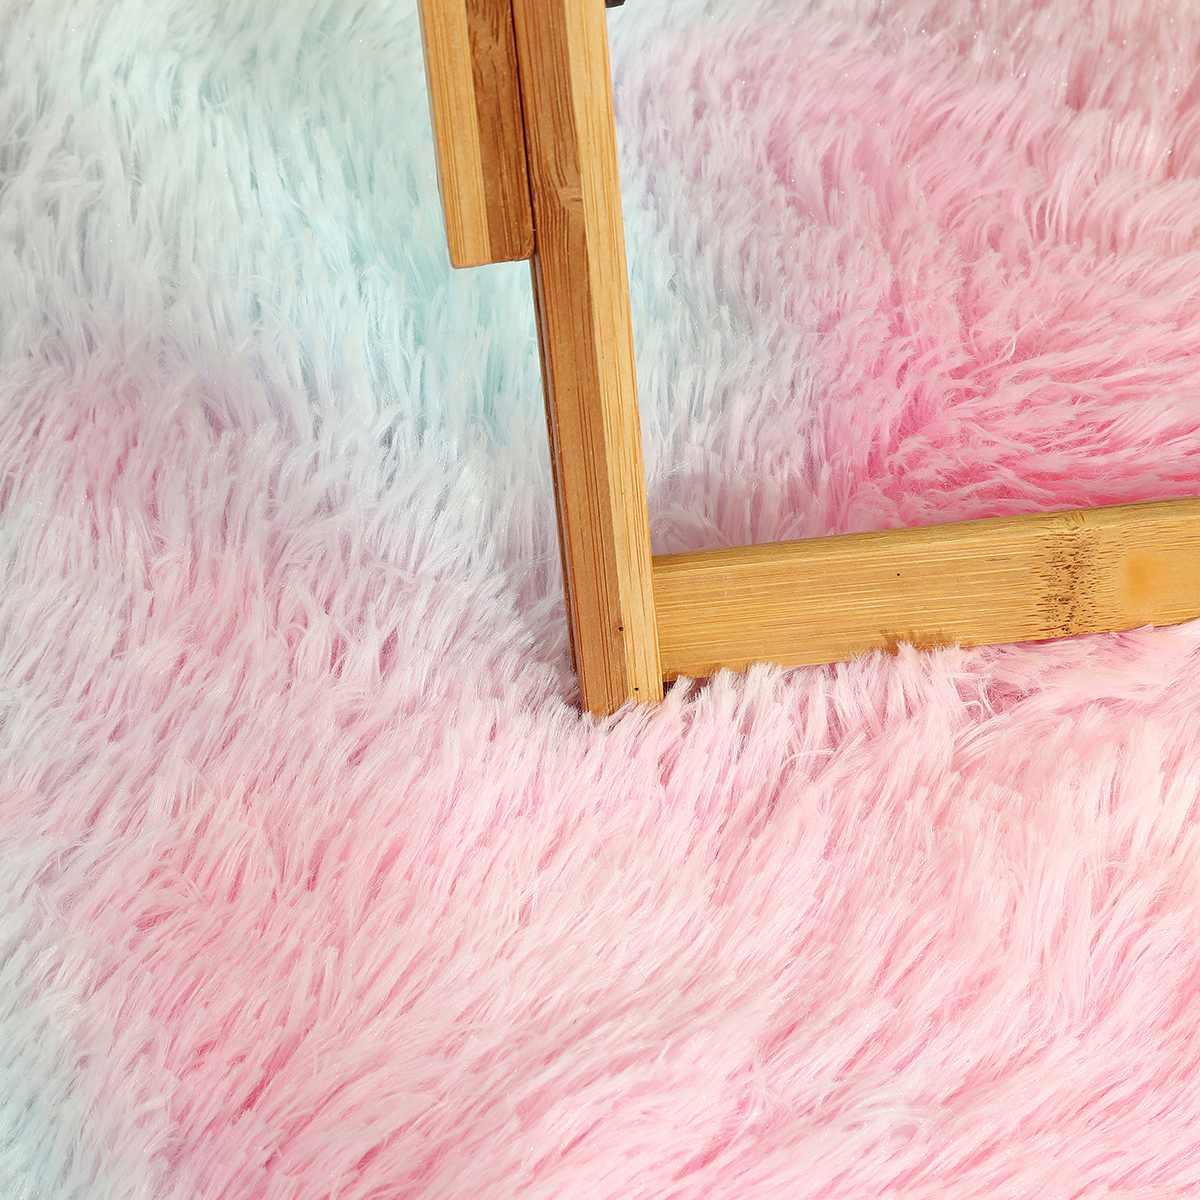 Soft Tie-Dye Art Carpet Rainbow Gradient Color Fluffy Rugs Baby Crawling Mat Living Room Carpet (D68)(RU2)(1U68)